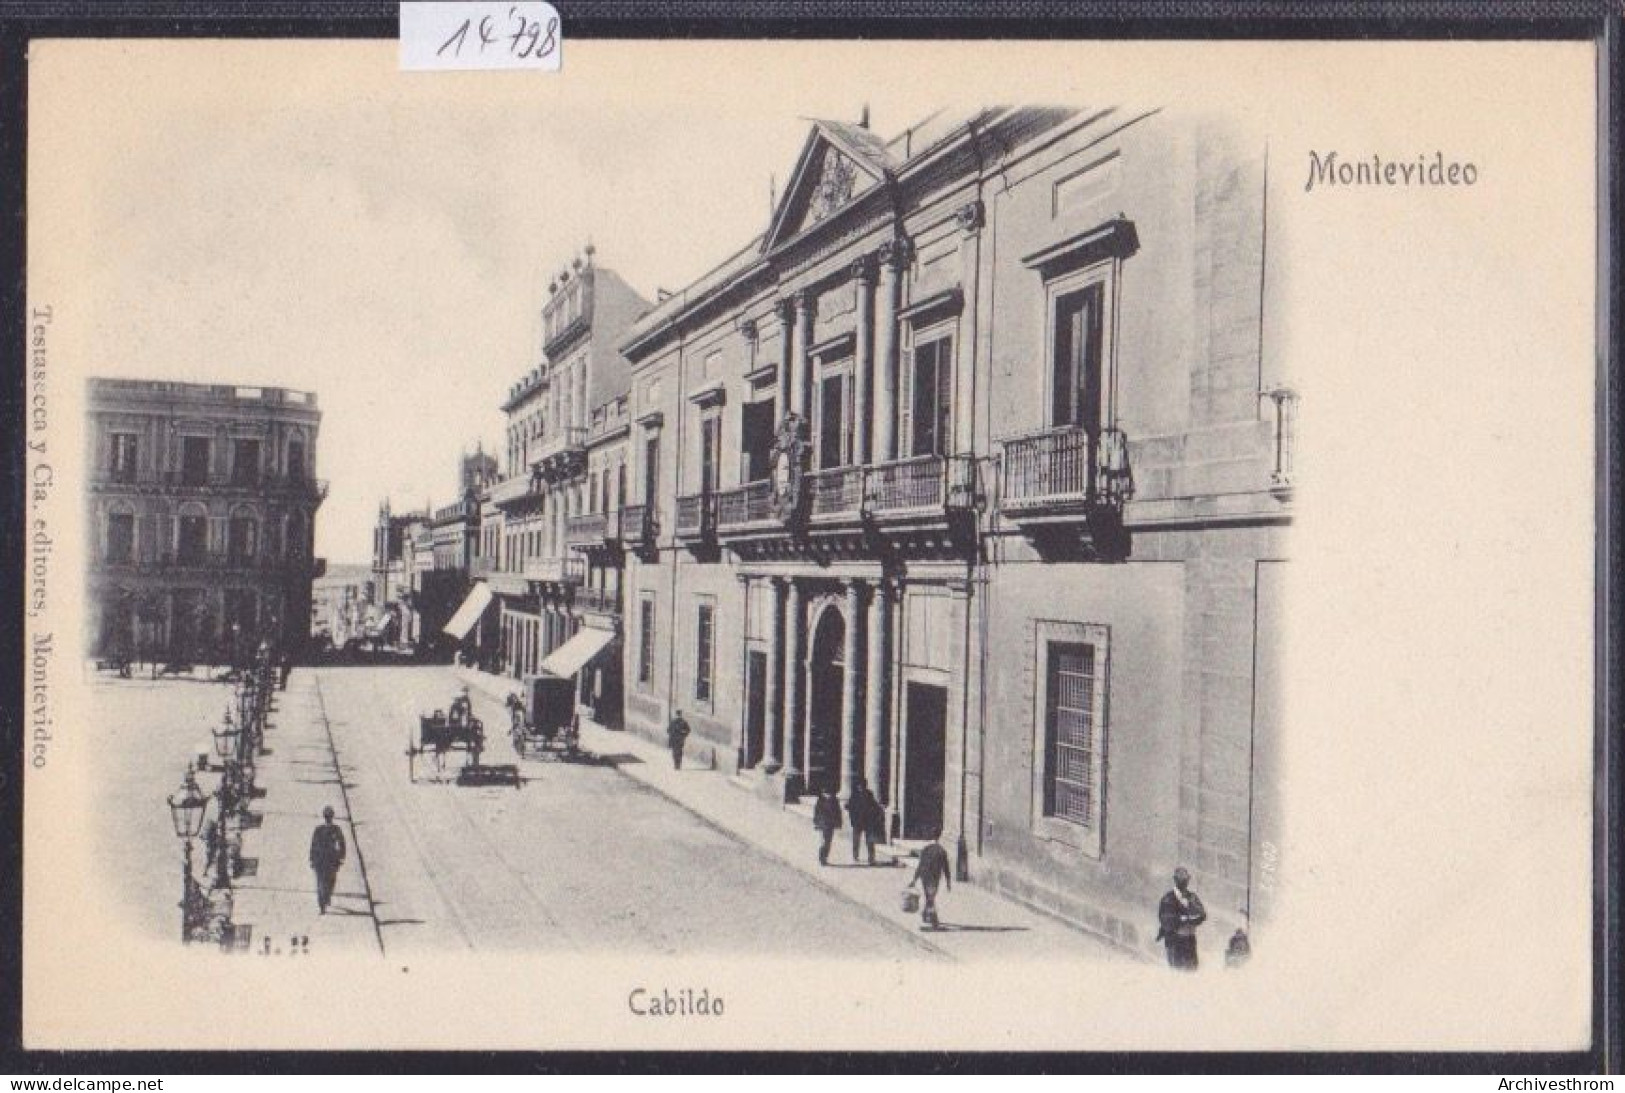 Uruguay - Montevideo - Cabildo (14'798) - Uruguay